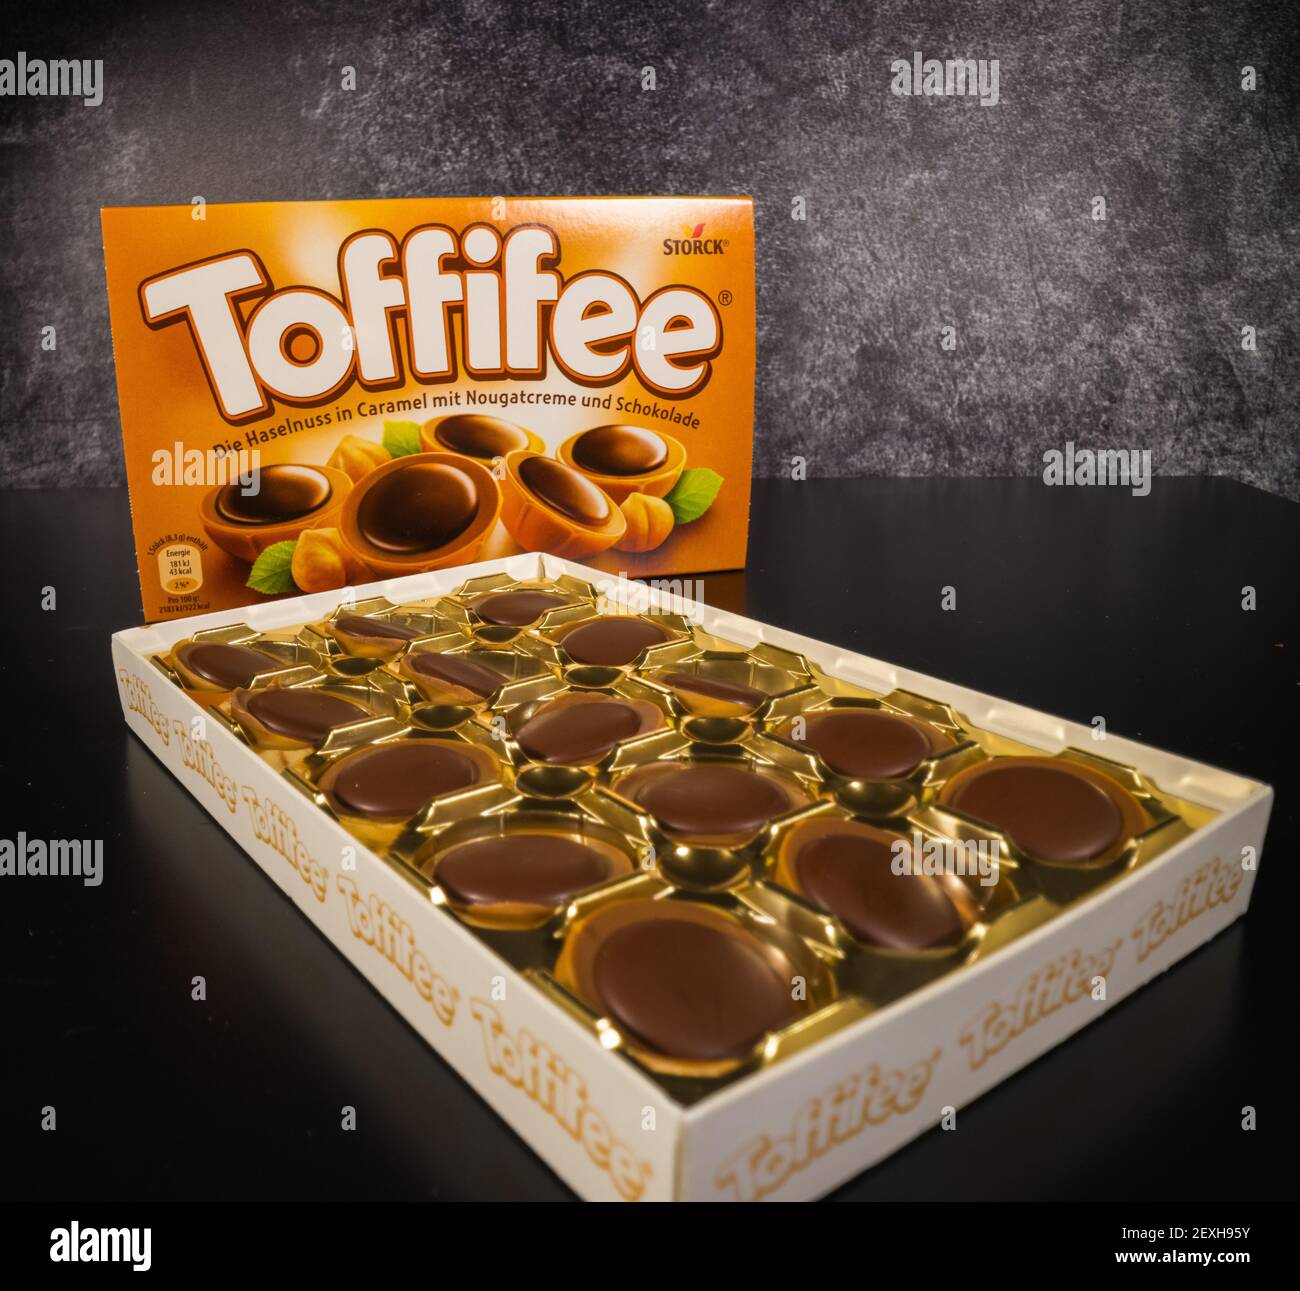 Toffifee - sweet caramel candy with chocolate - FRANKFURT, GERMANY